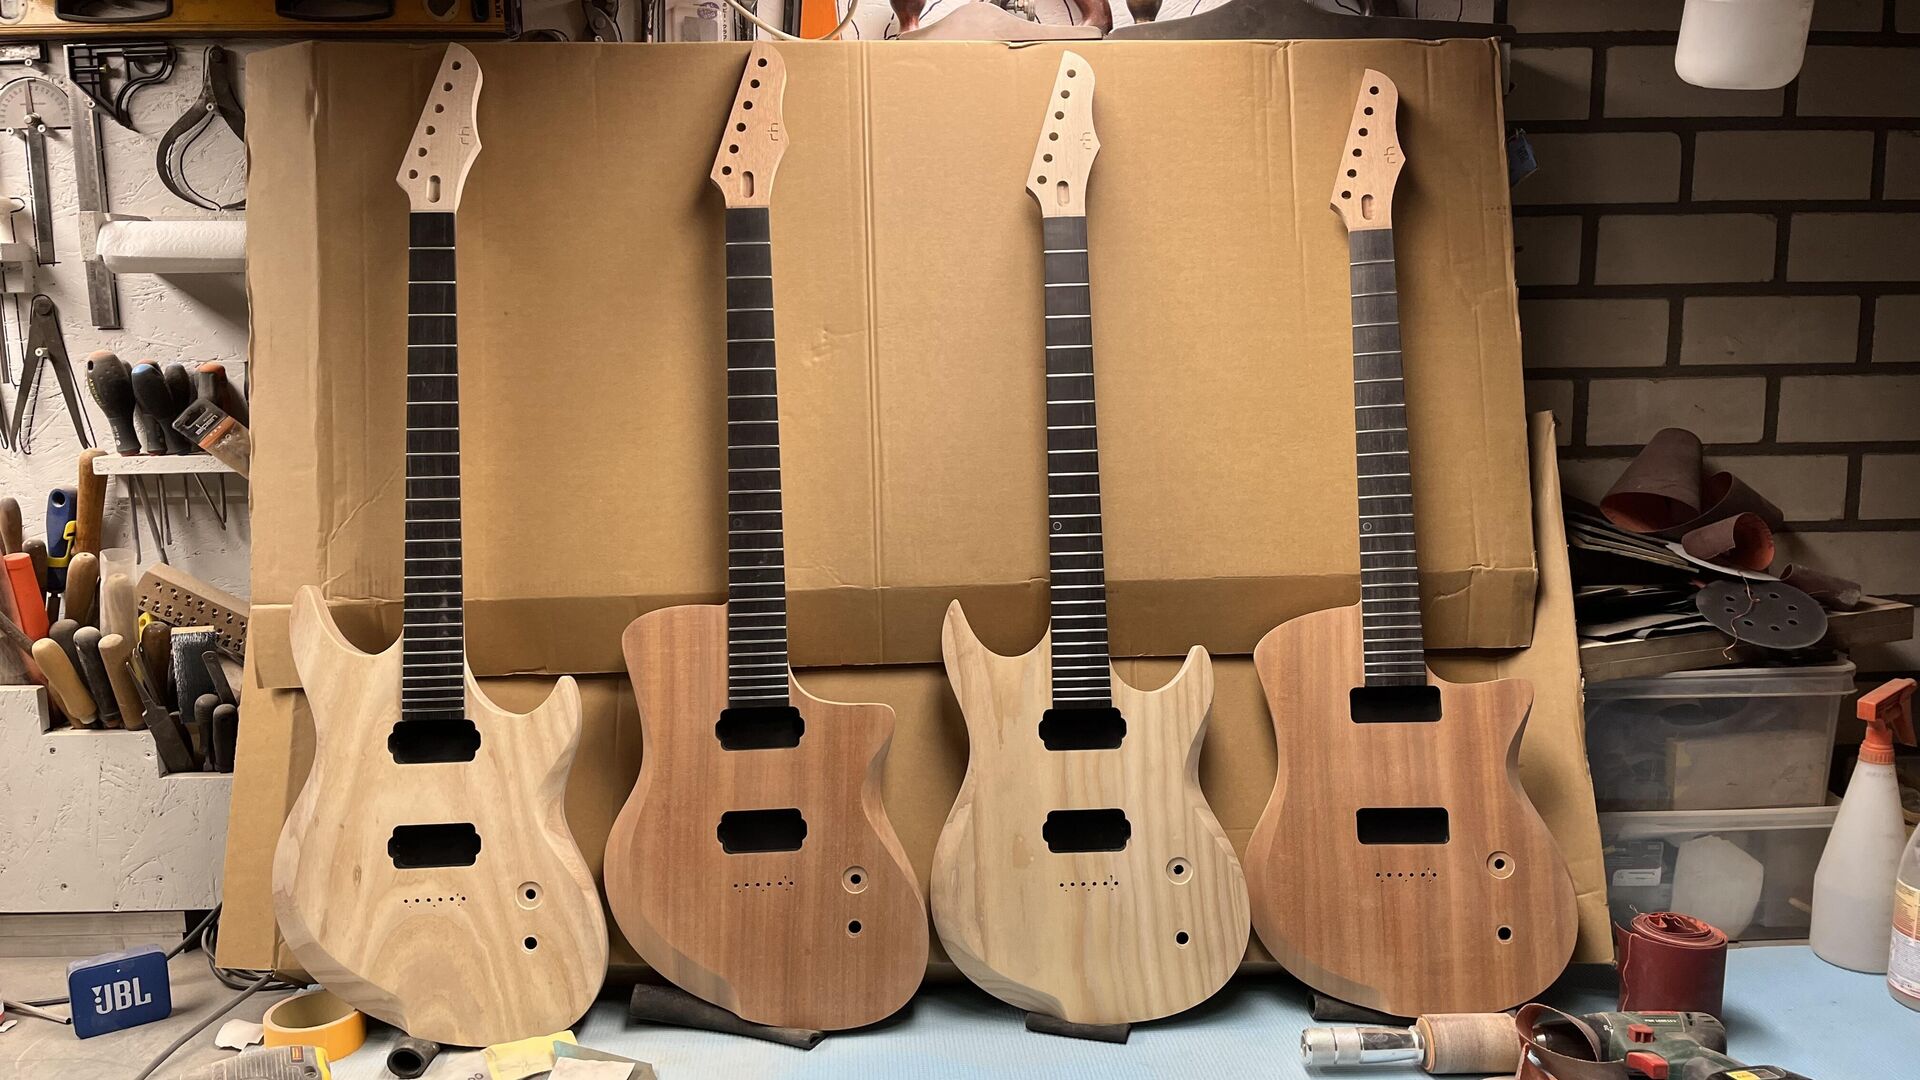 How do you build your own guitar?